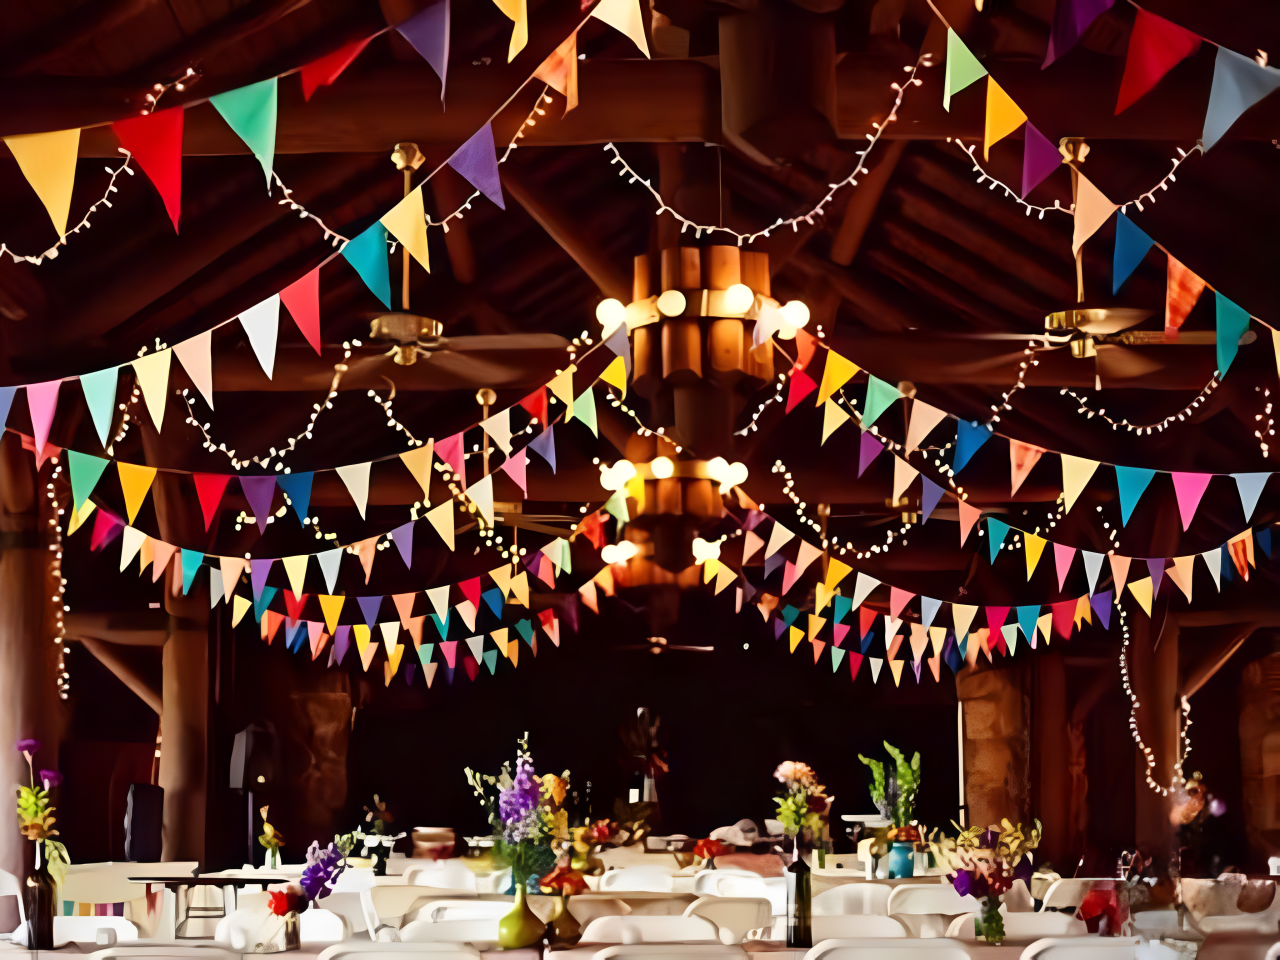 restaurante decorado de festa junina com bandeiras no teto